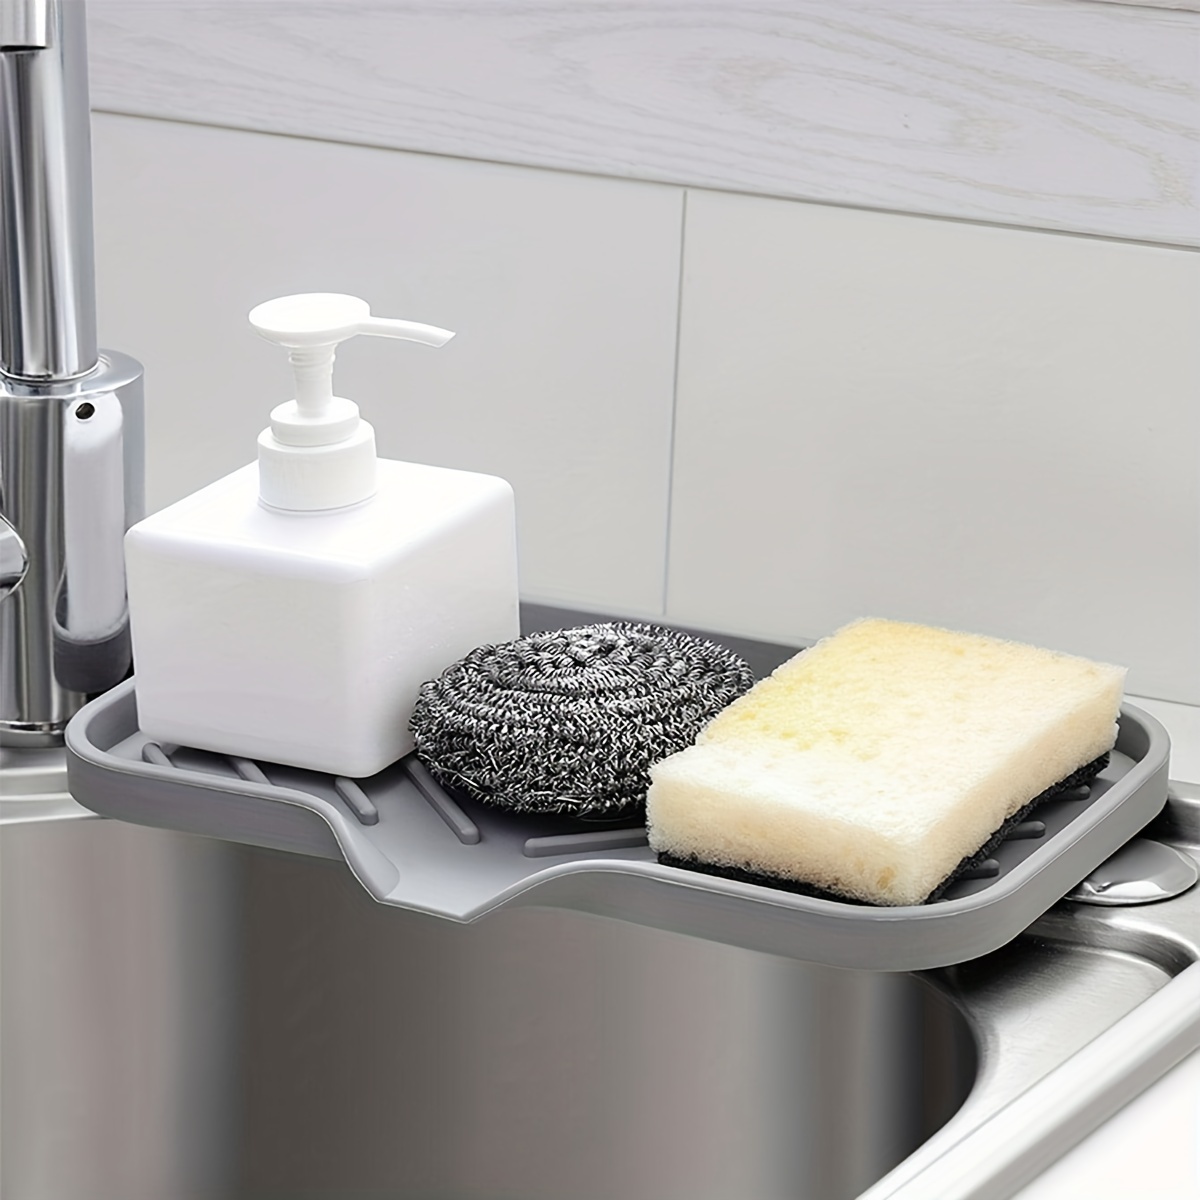 Silicone Kitchen Bathroom Sink Tray Organiser Sponge Holder Caddy